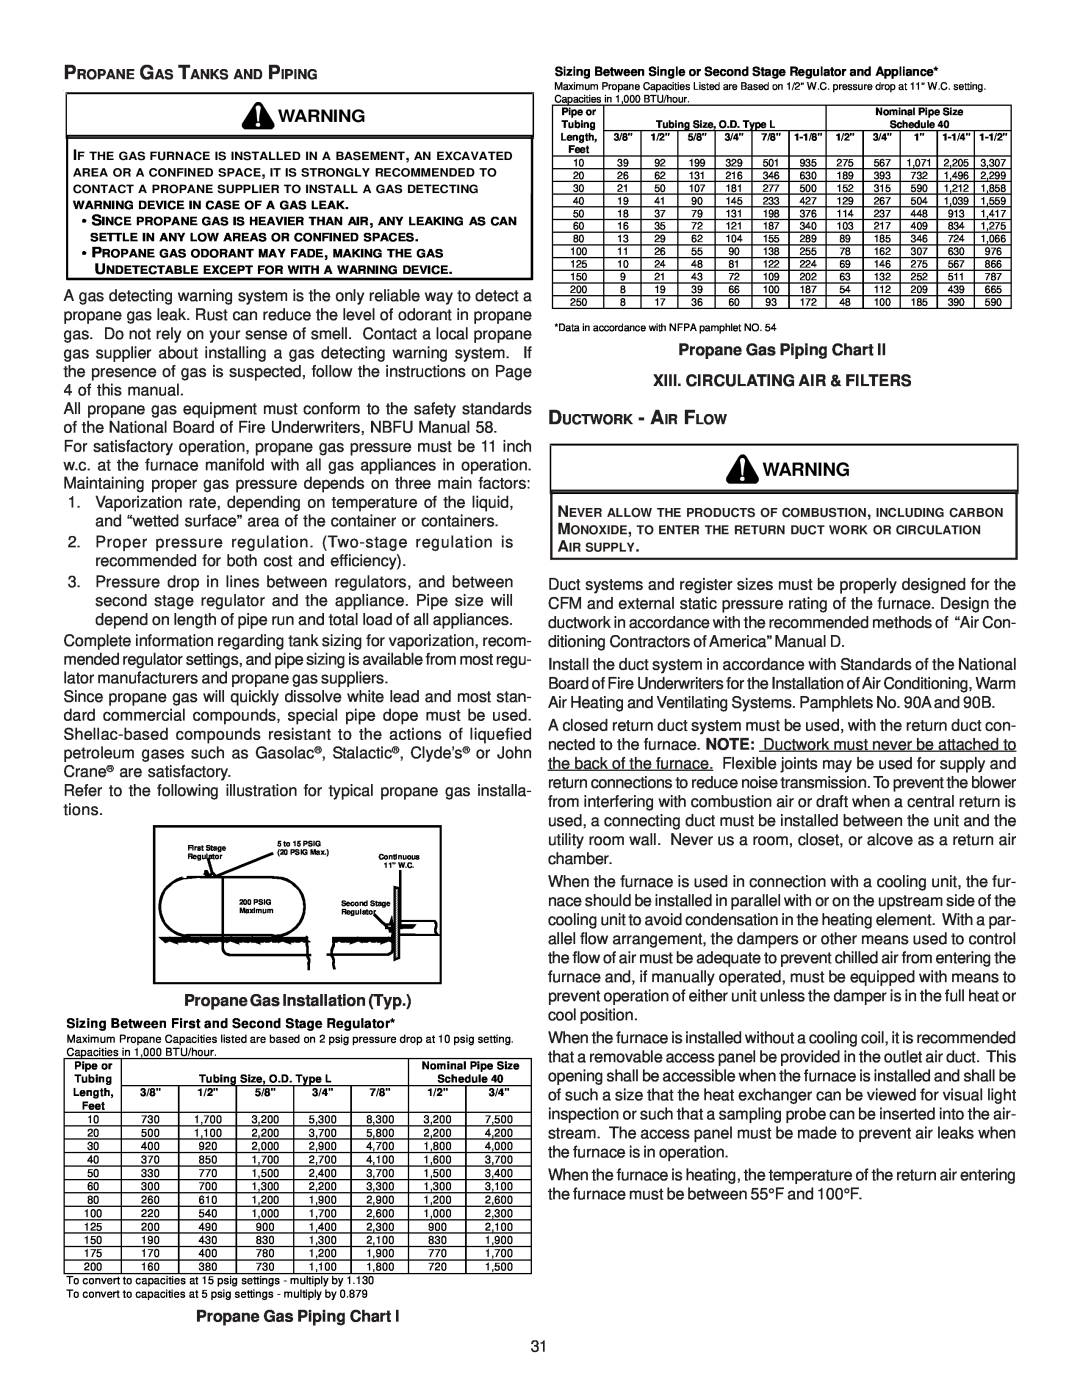 Goodman Mfg GAS-FIRED WARM AIR FURNACE installation instructions Propane Gas Installation Typ, Propane Gas Piping Chart 